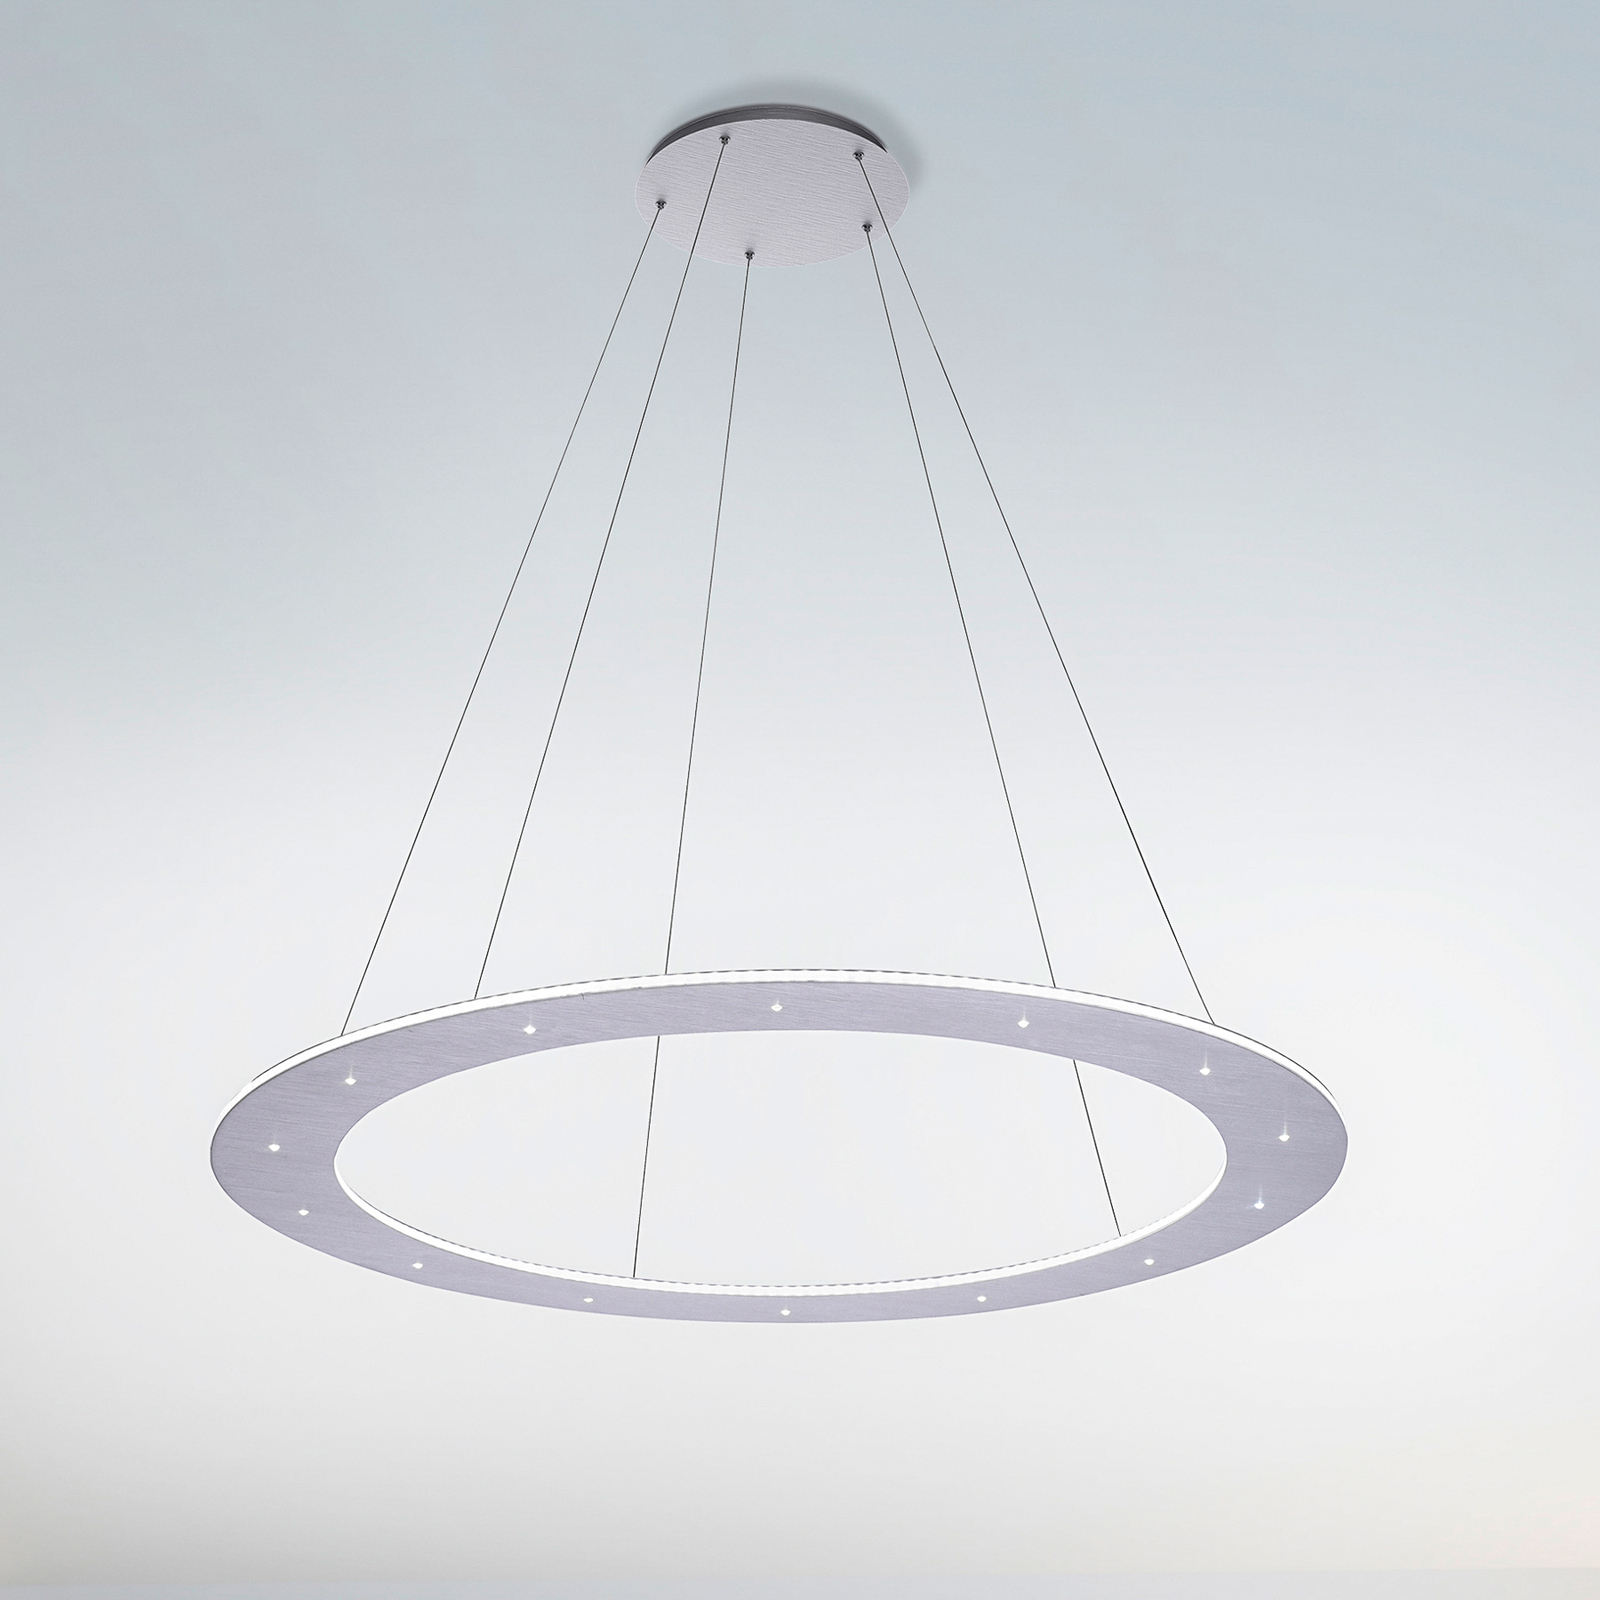 Paul Neuhaus Pure-Cosmo LED závěsné světlo Ø 75cm